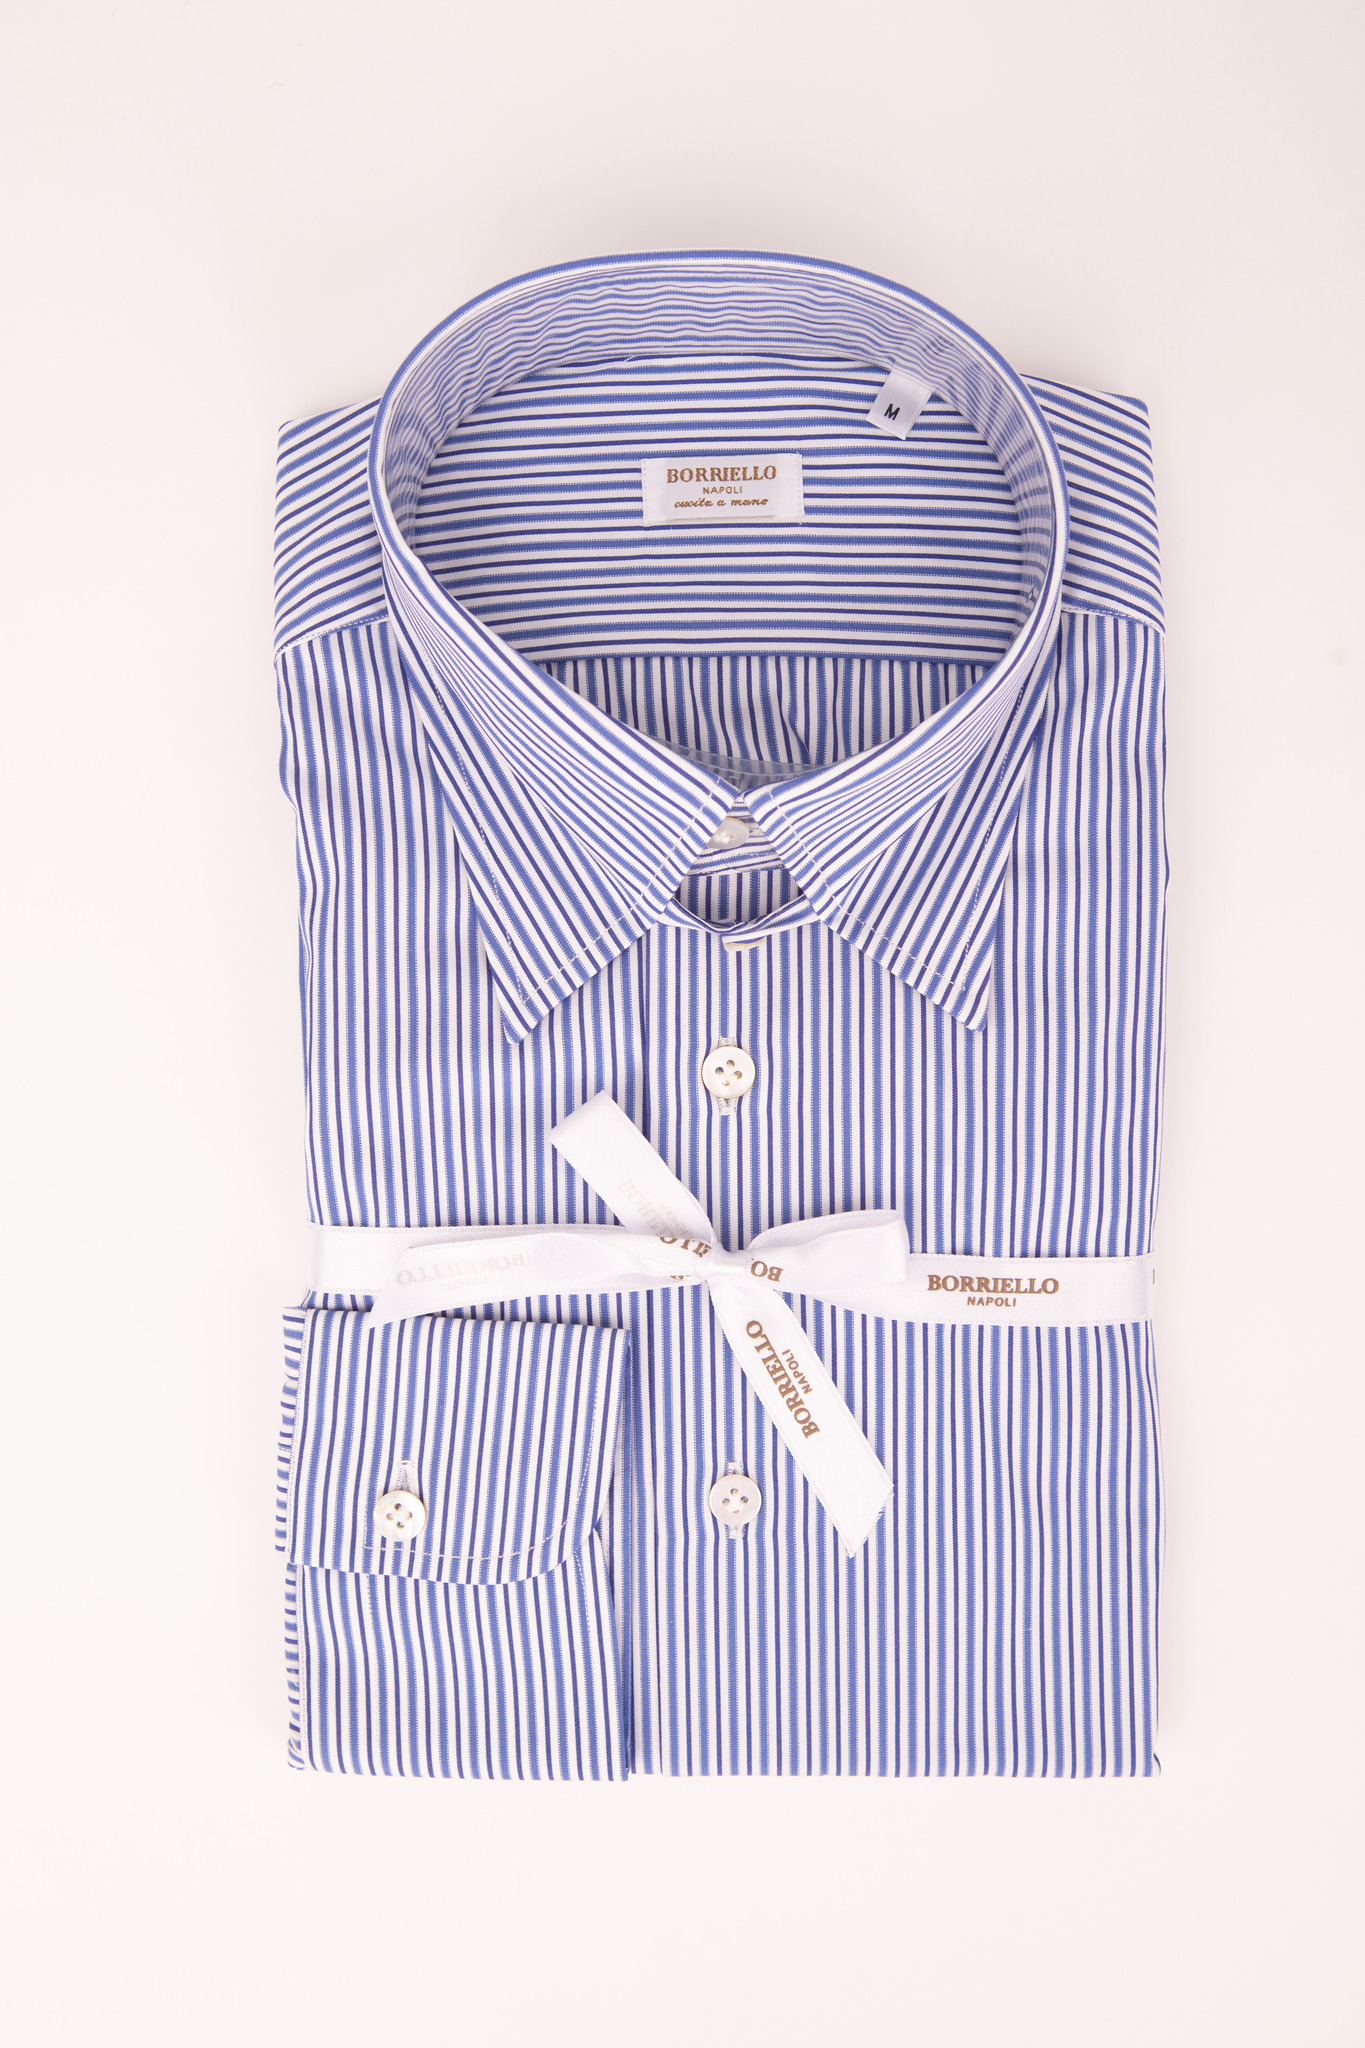 Borriello blue and white striped shirt